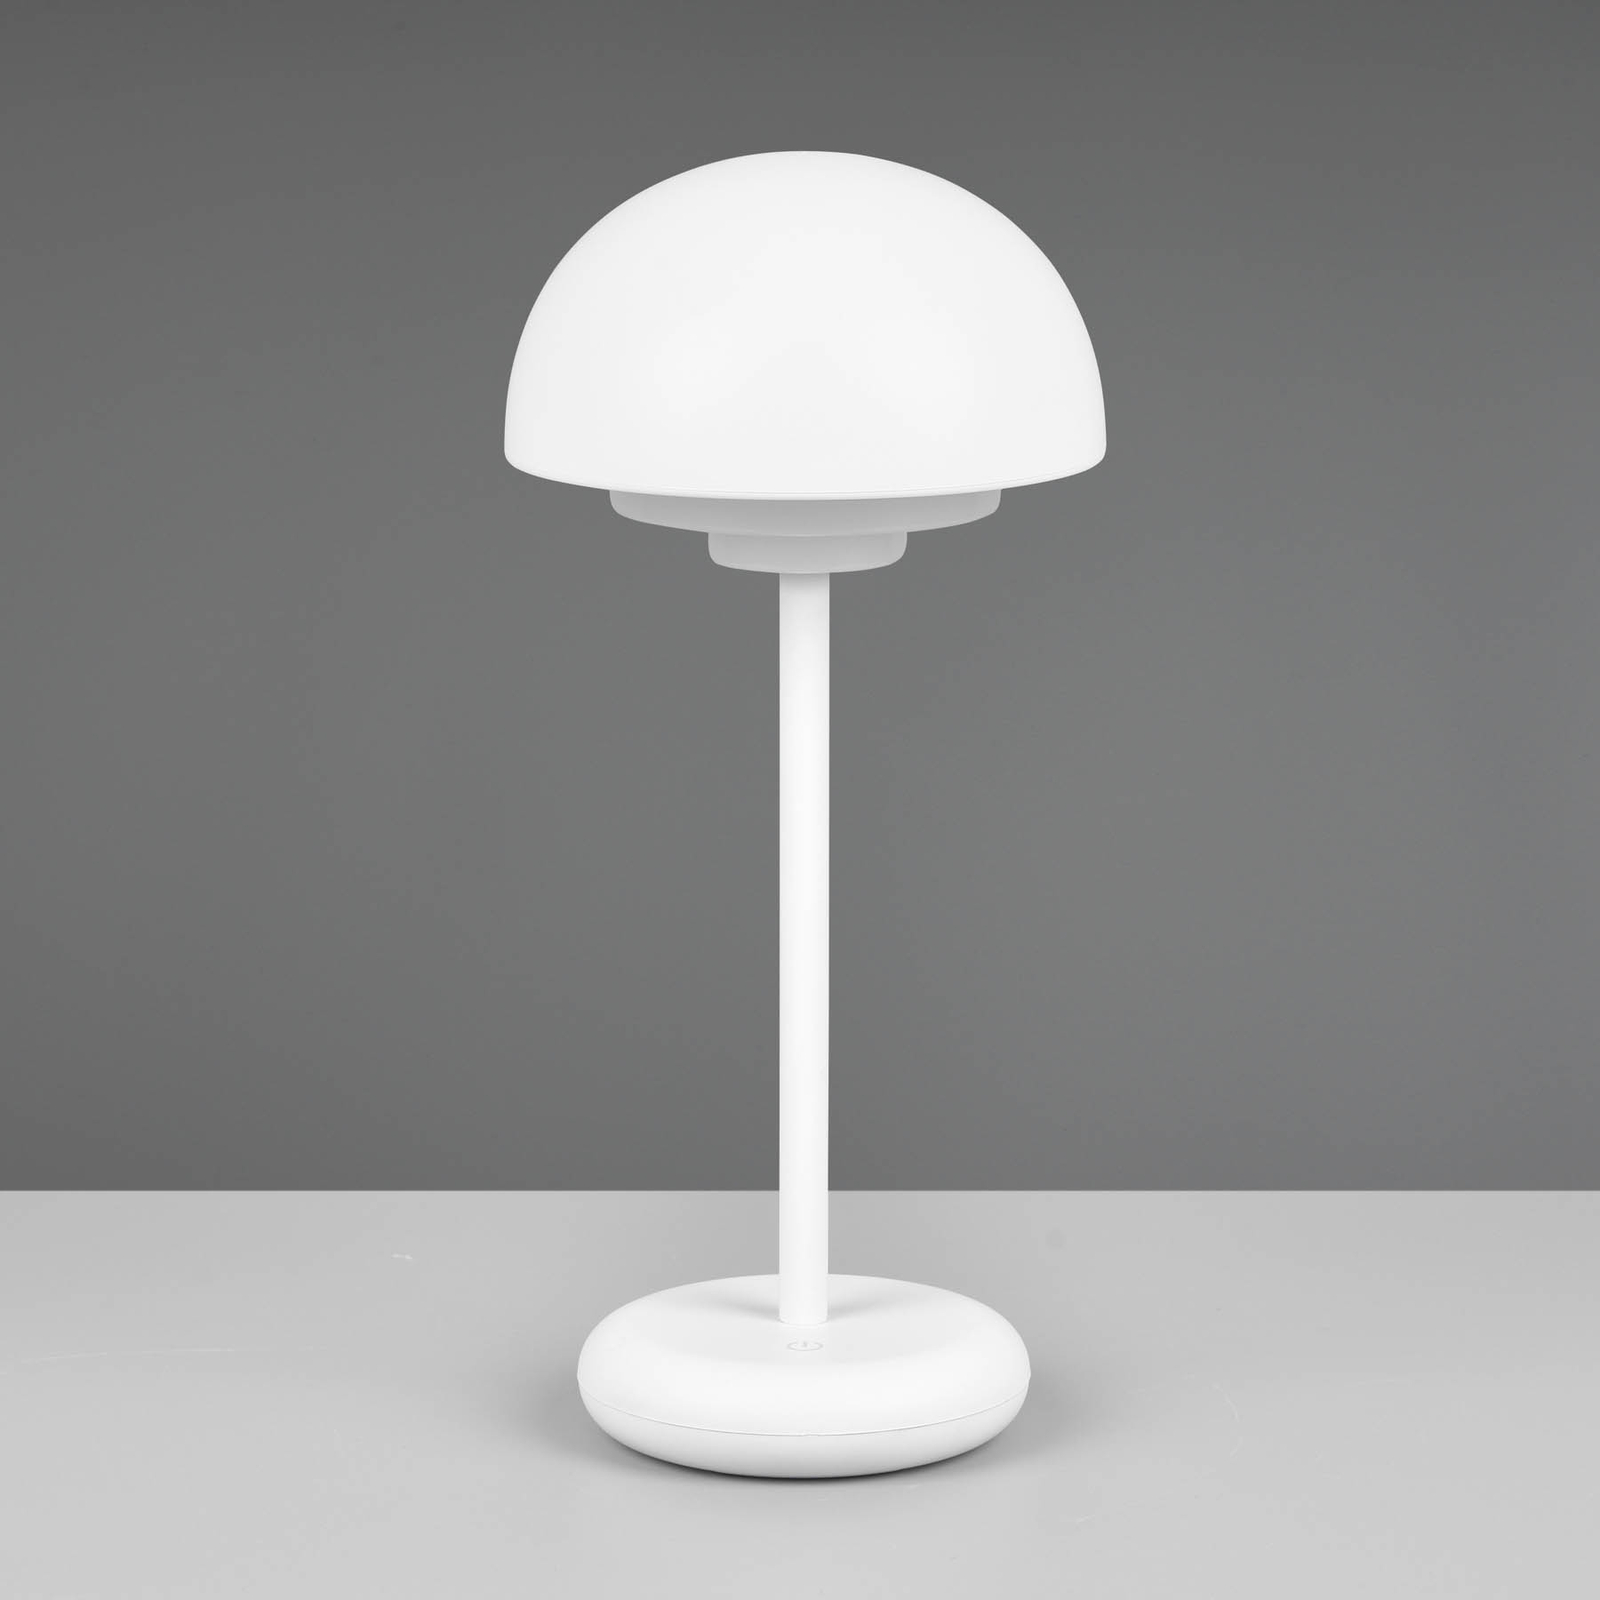 Lampe table LED Elliot IP44 batterie tactile blanc